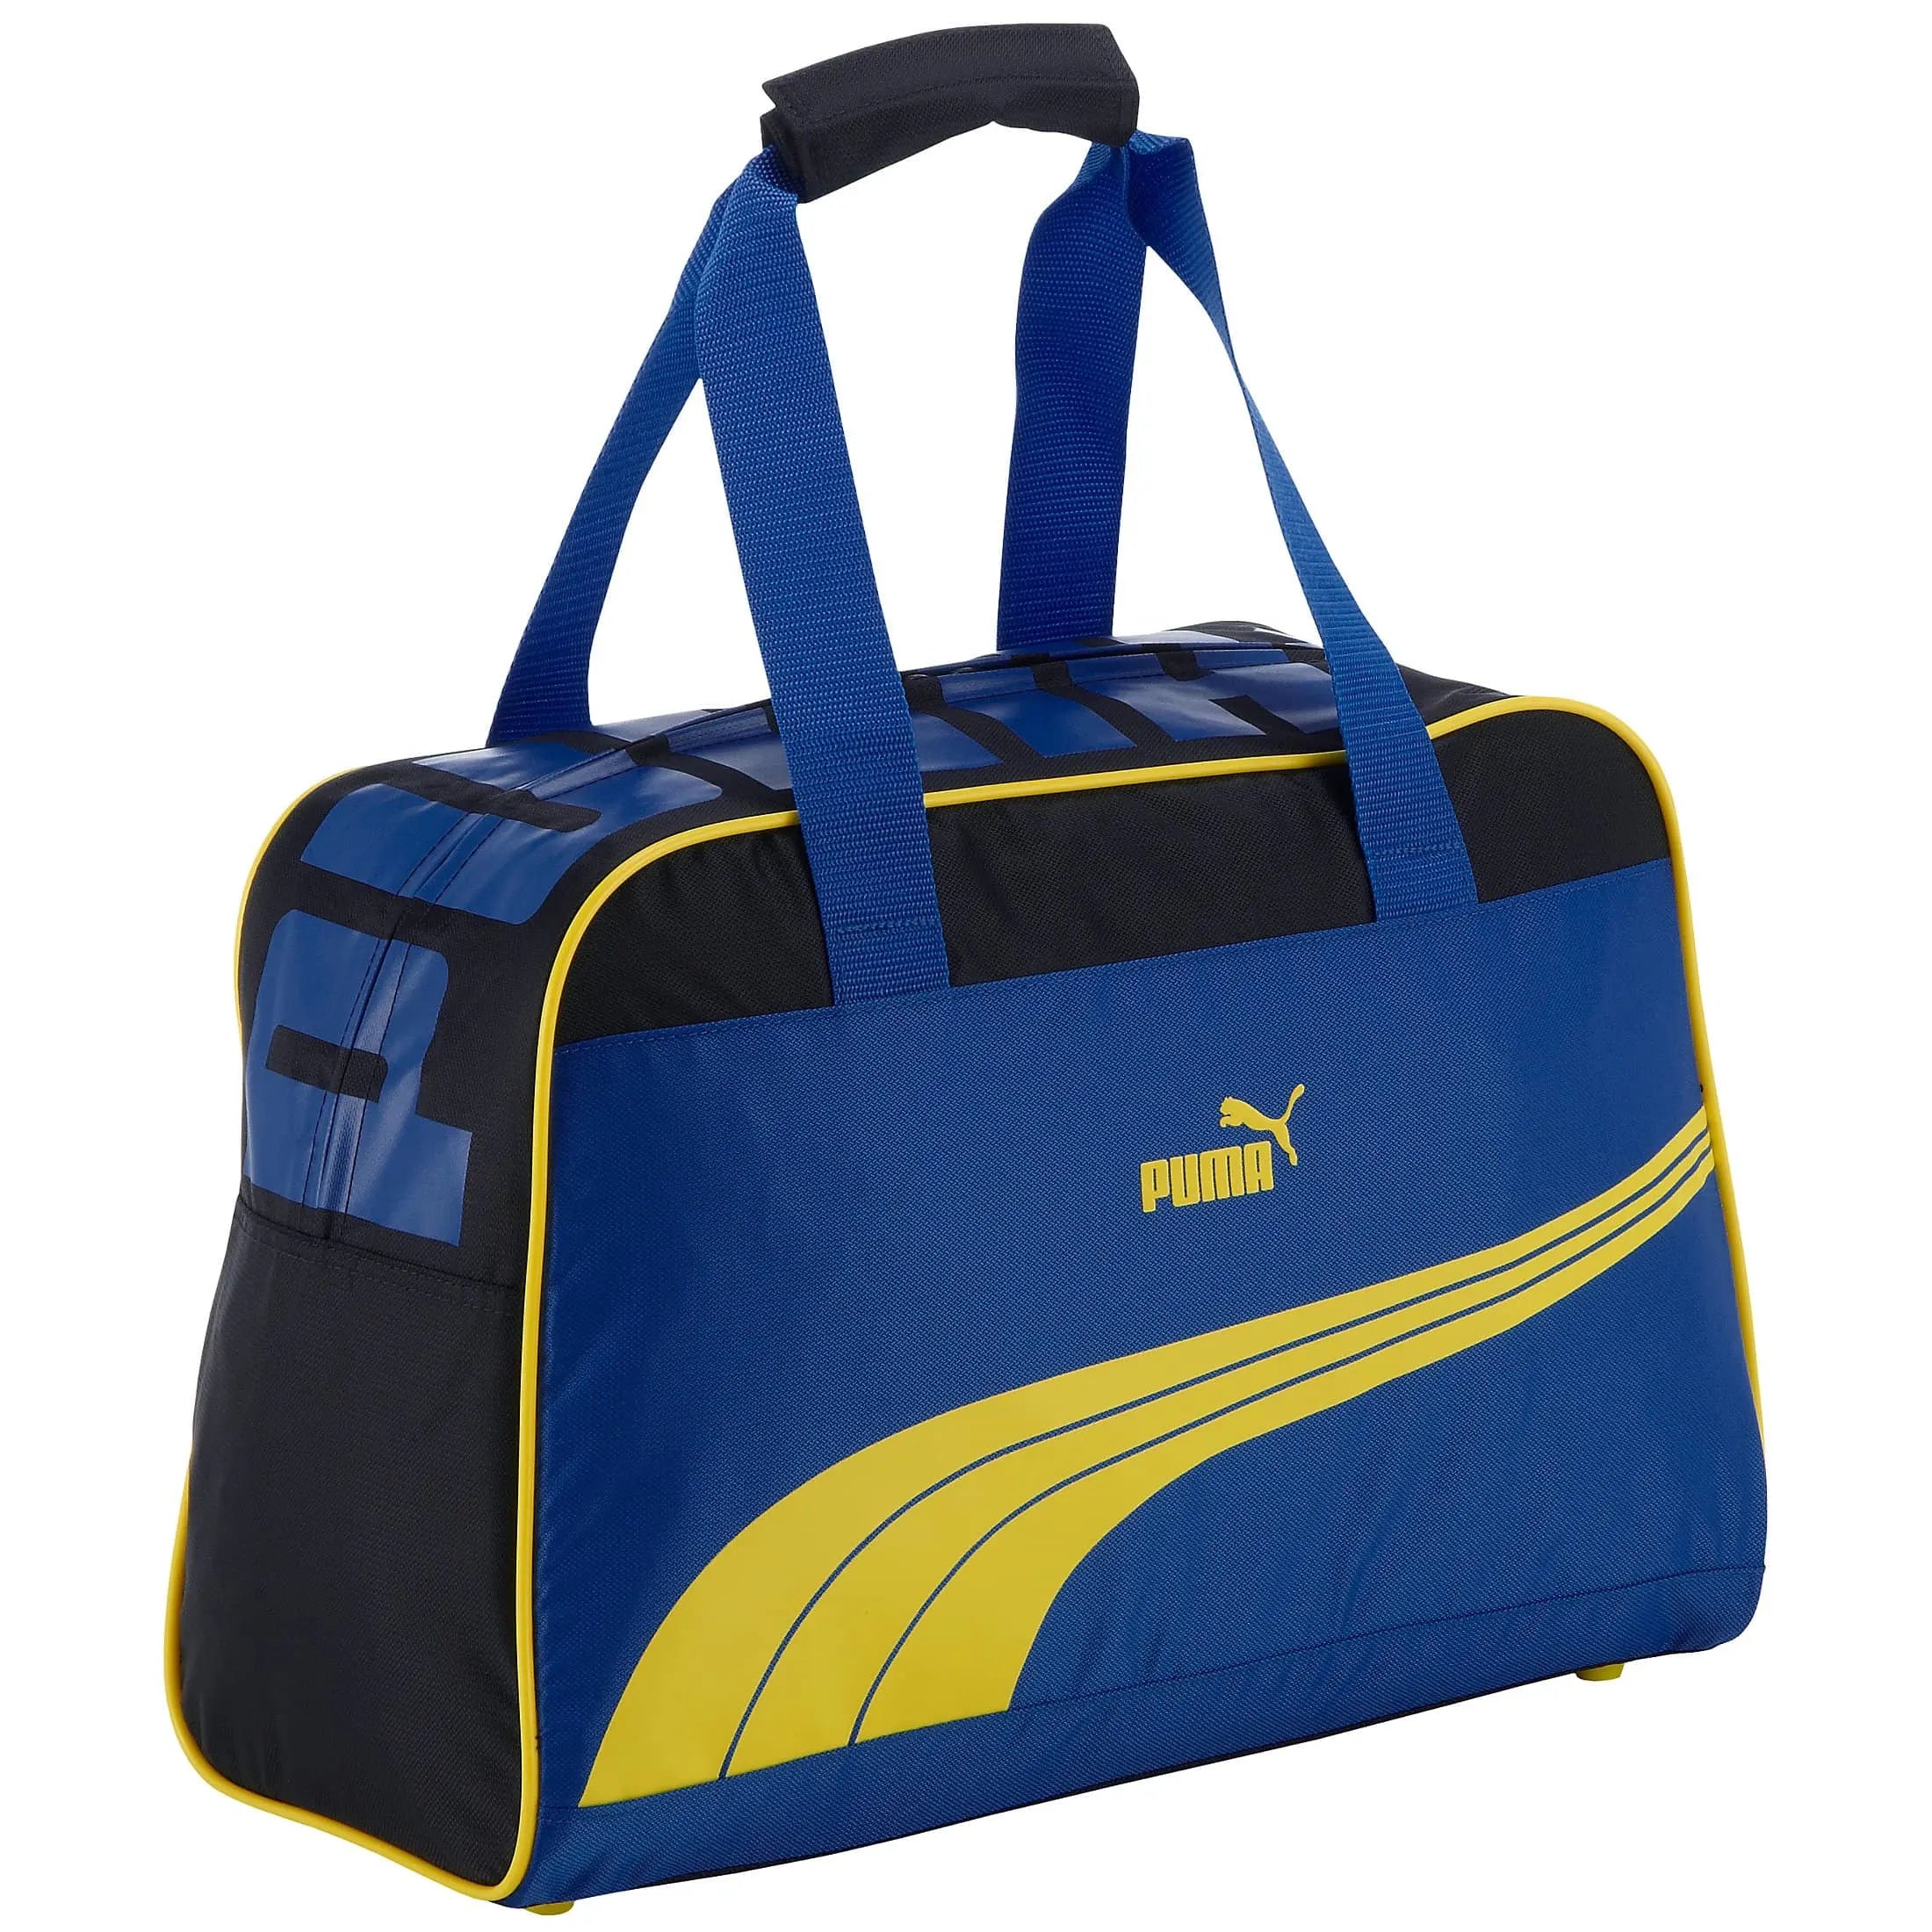 Puma Sole Grip Bag shoulder bag 44 cm - victoria blue-new navy-buttercup